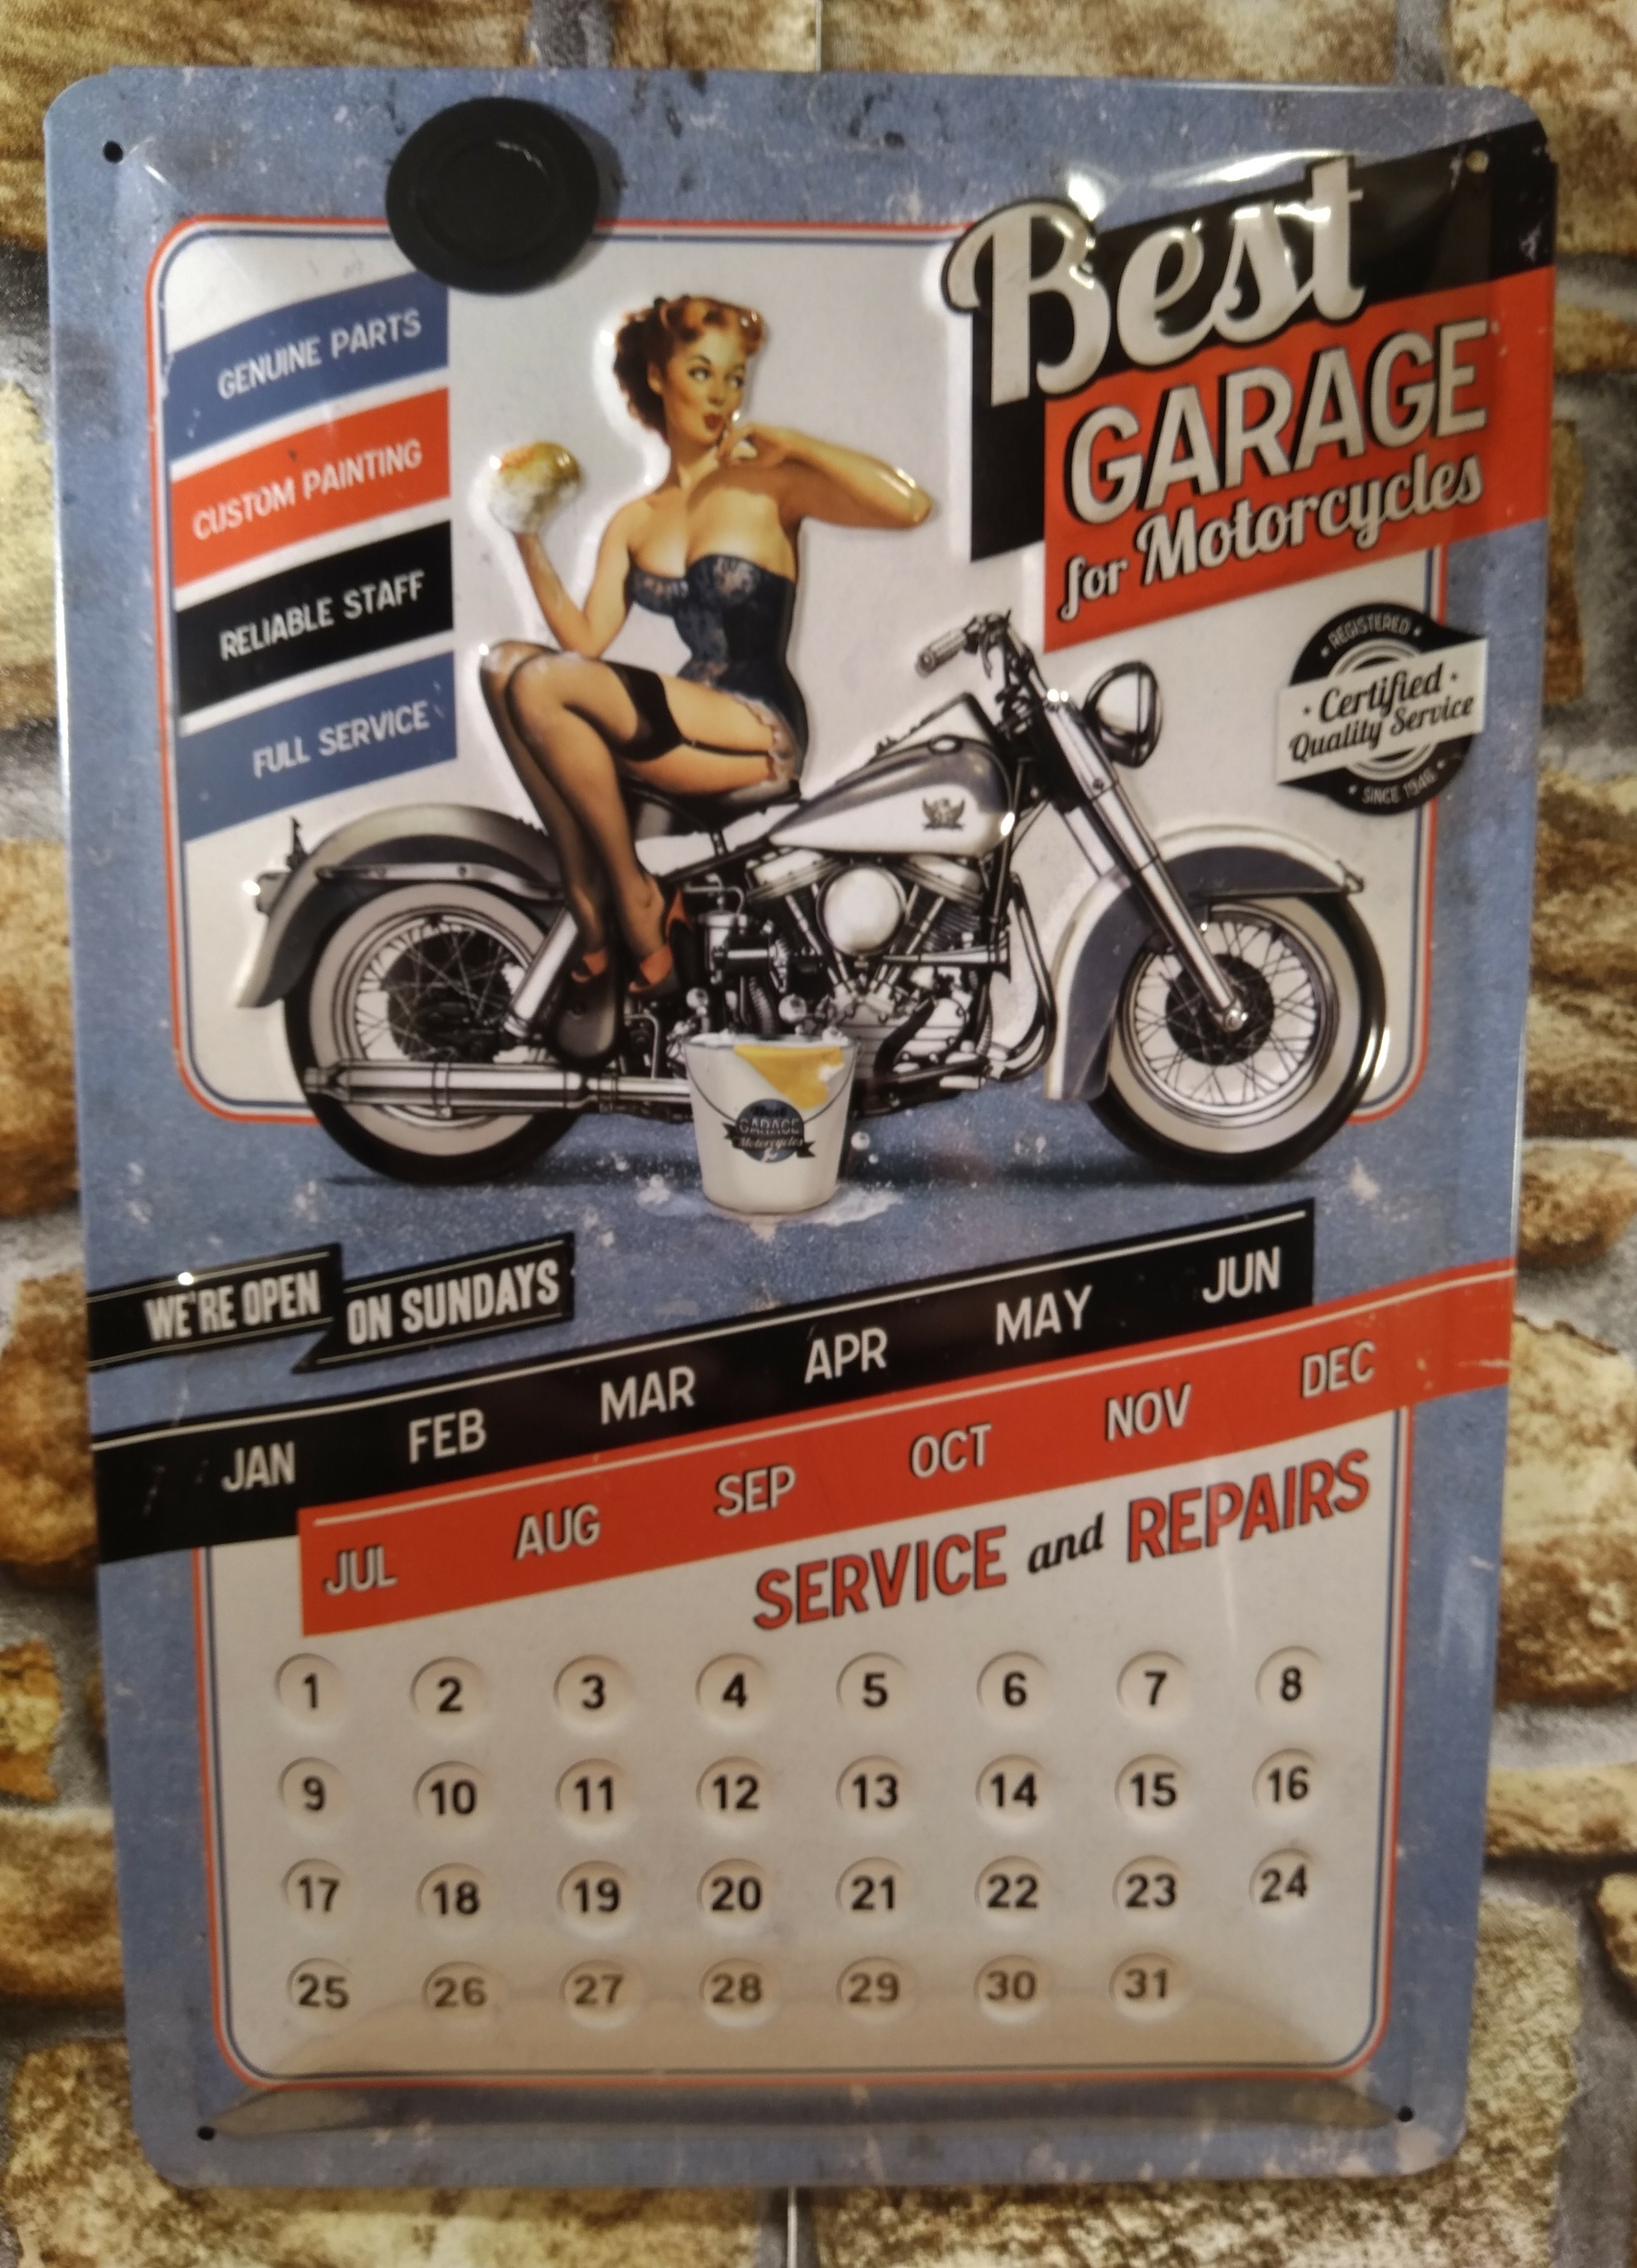 déco calendrier vintage pin-up best garage